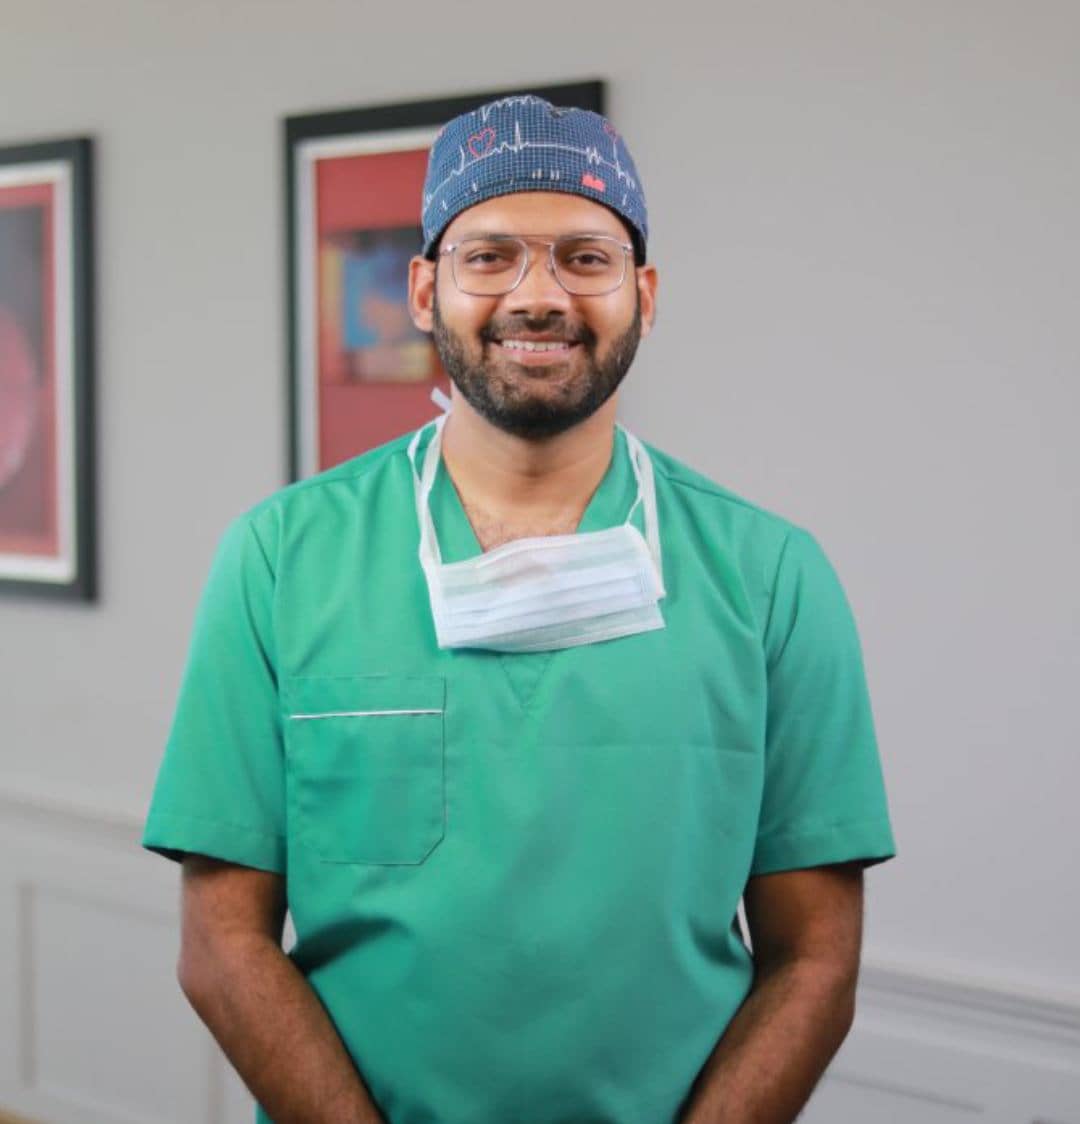 Best Plastic Surgeon in Hyderabad